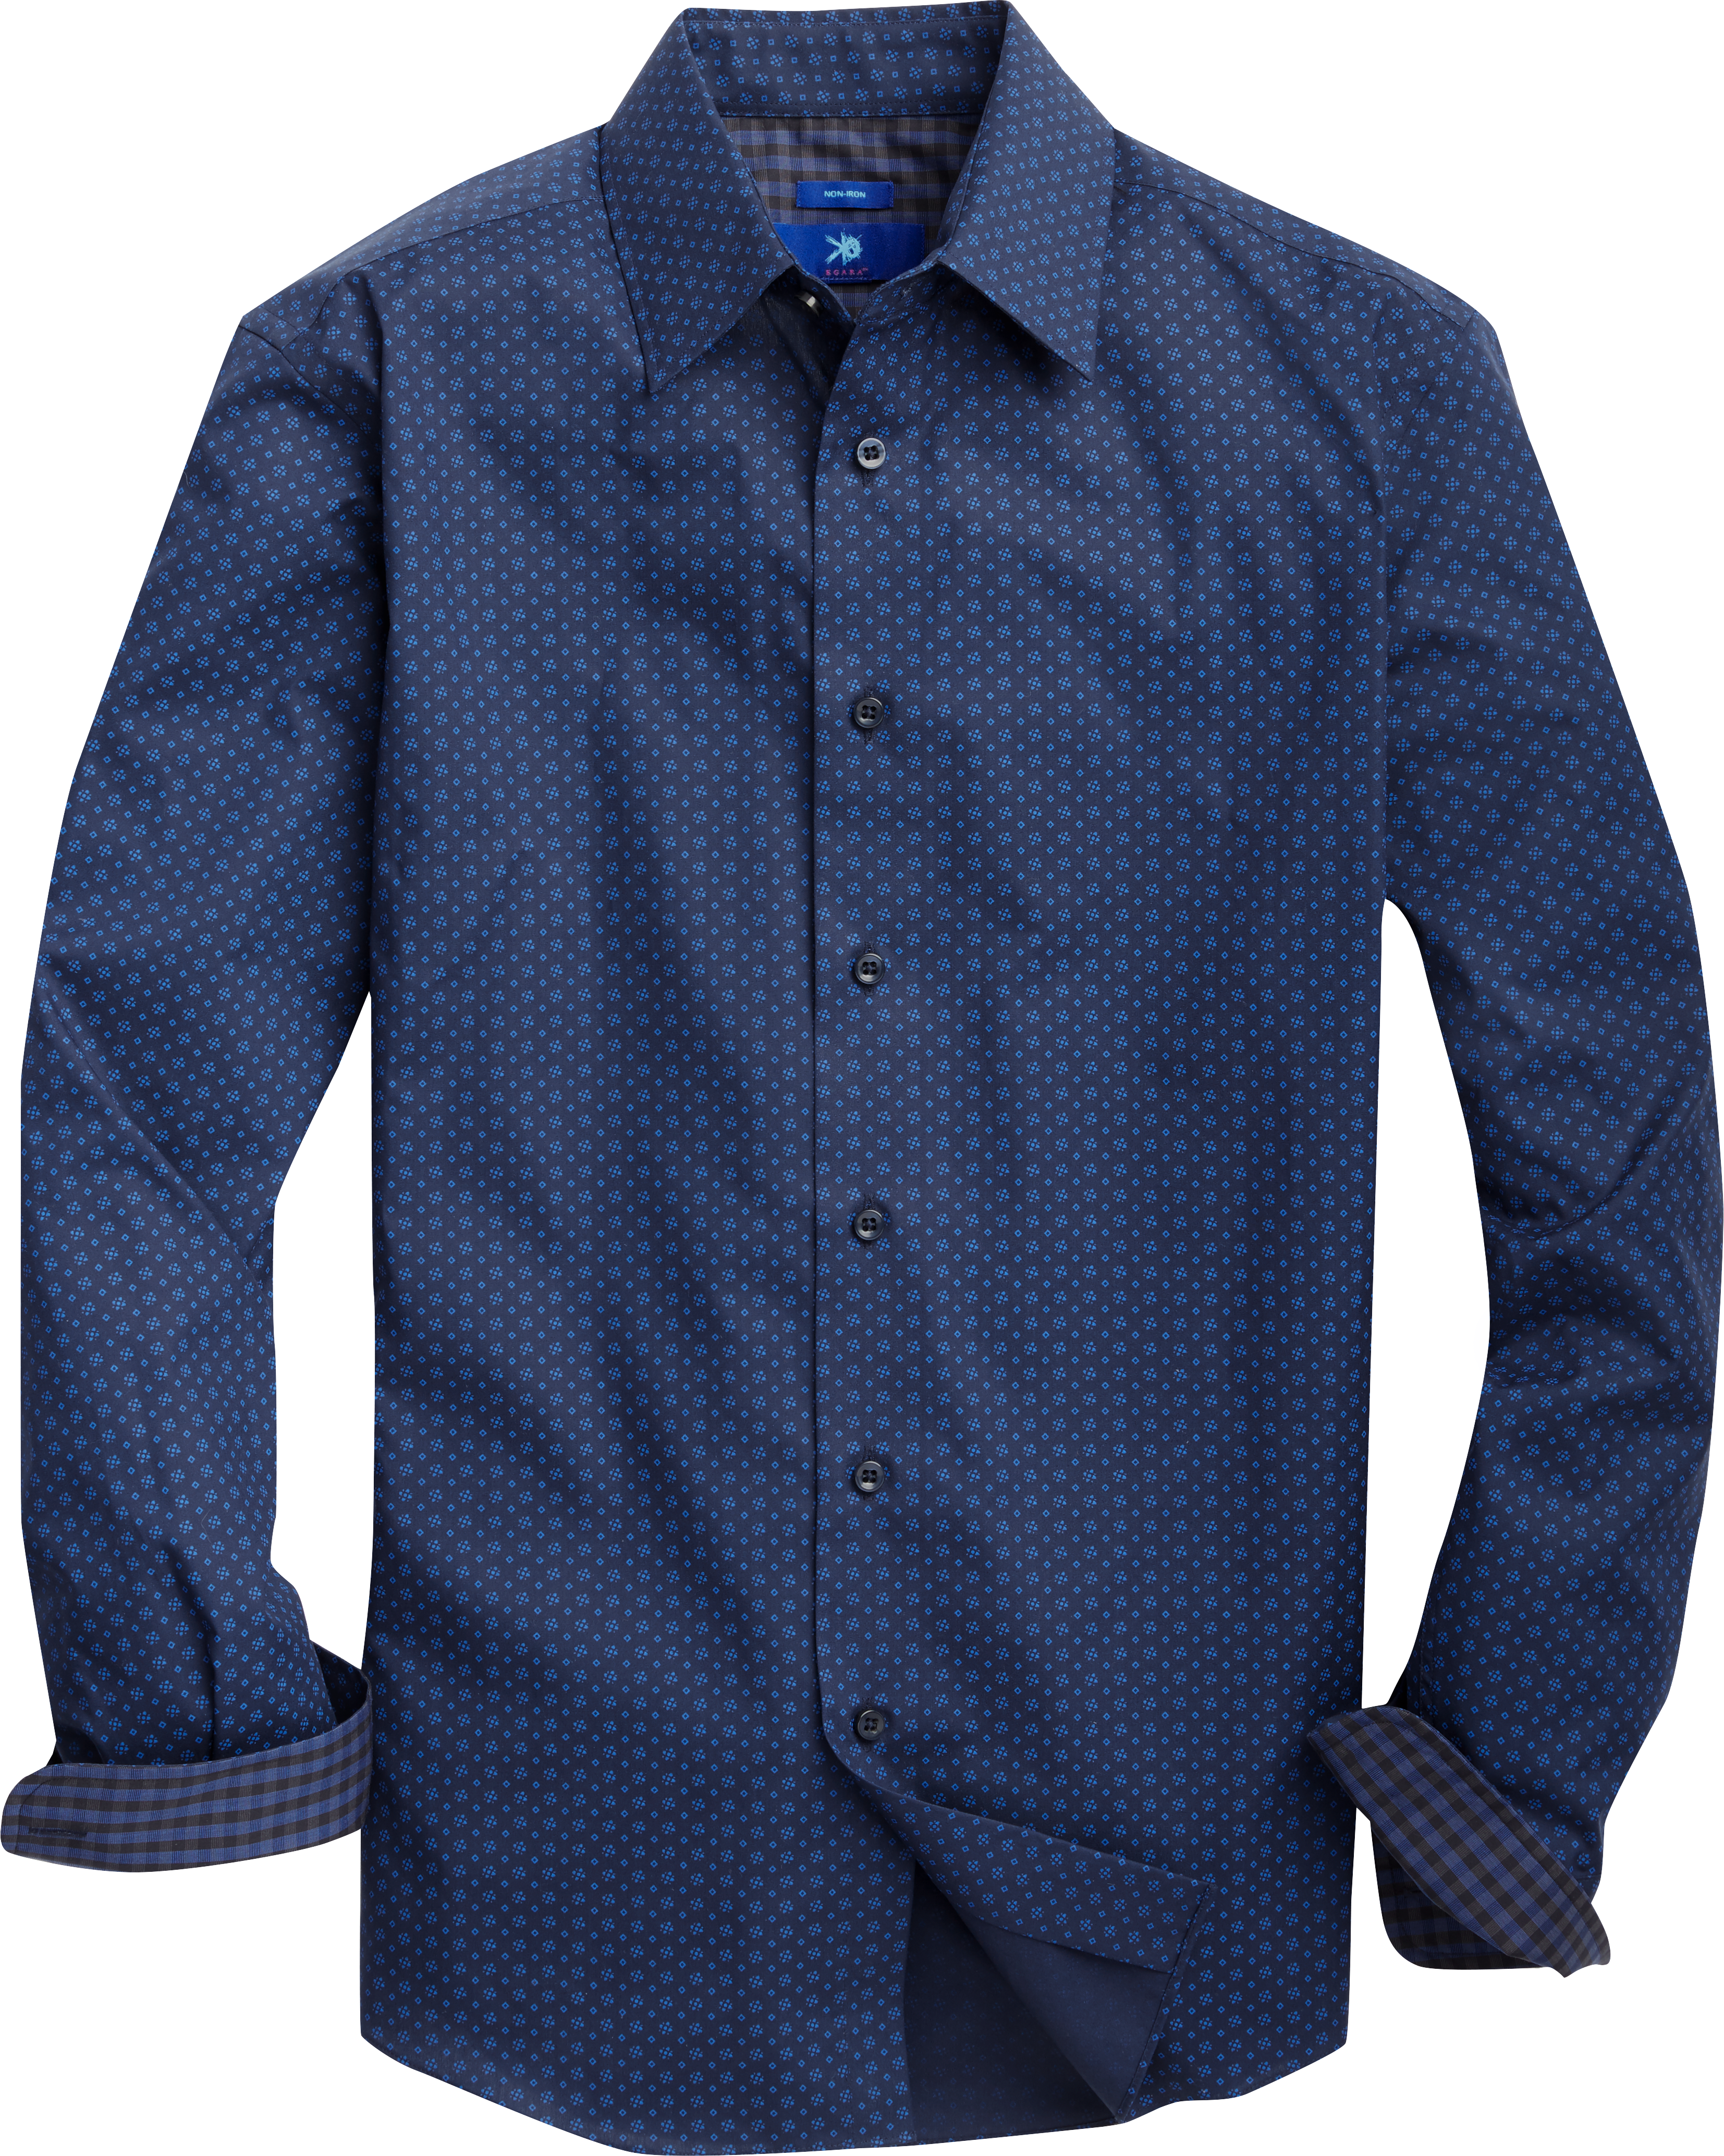 Egara Navy Floral & Diamond Sport Shirt - Men's Sale | Men's Wearhouse